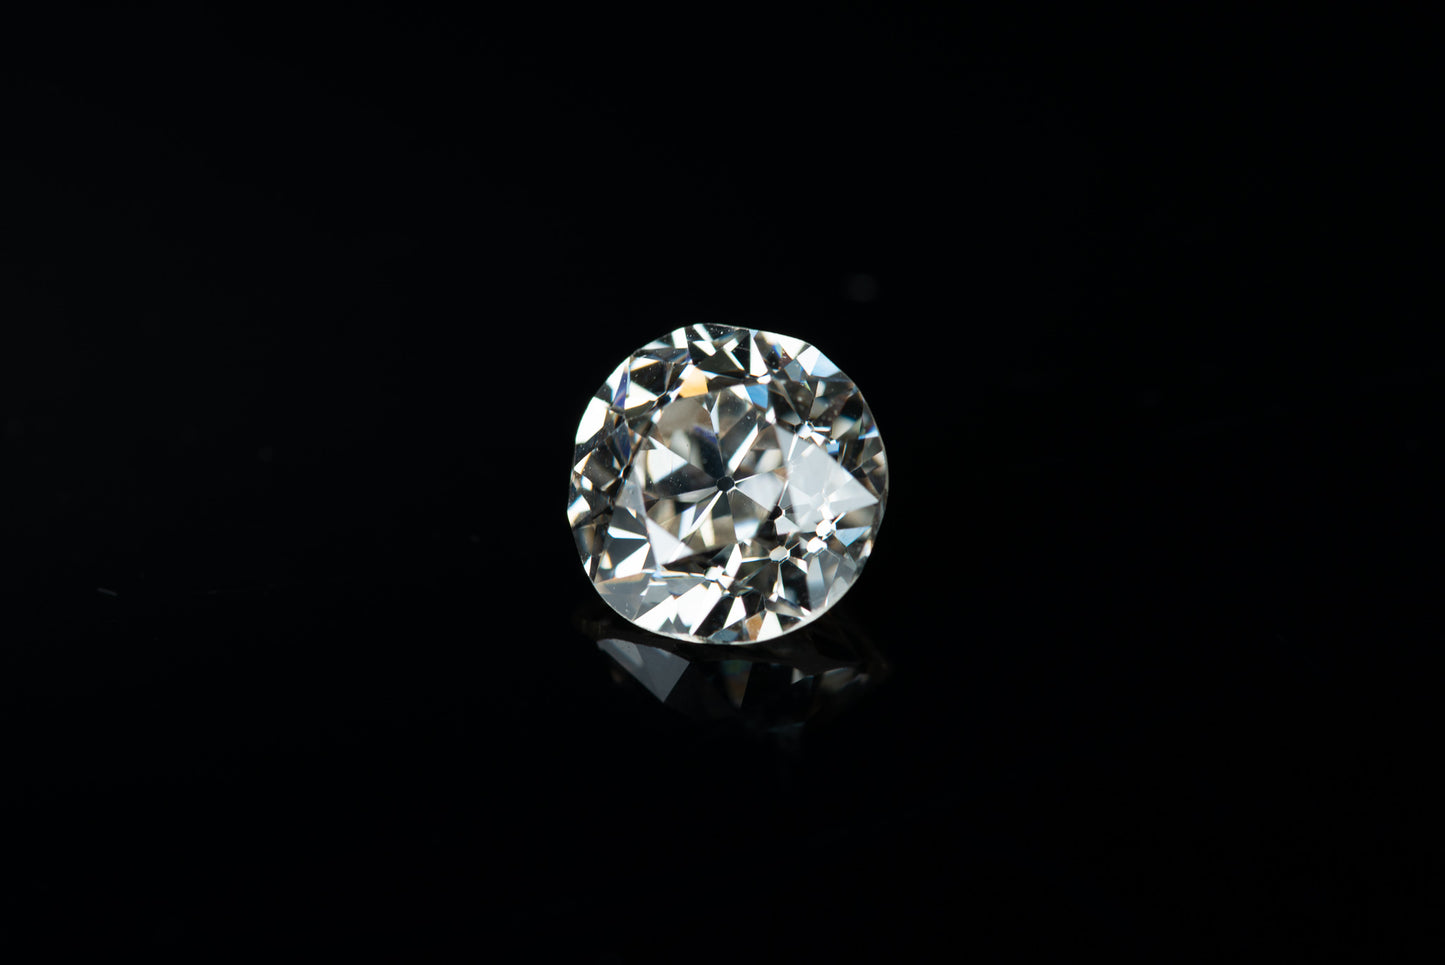 2.23 carat loose diamond